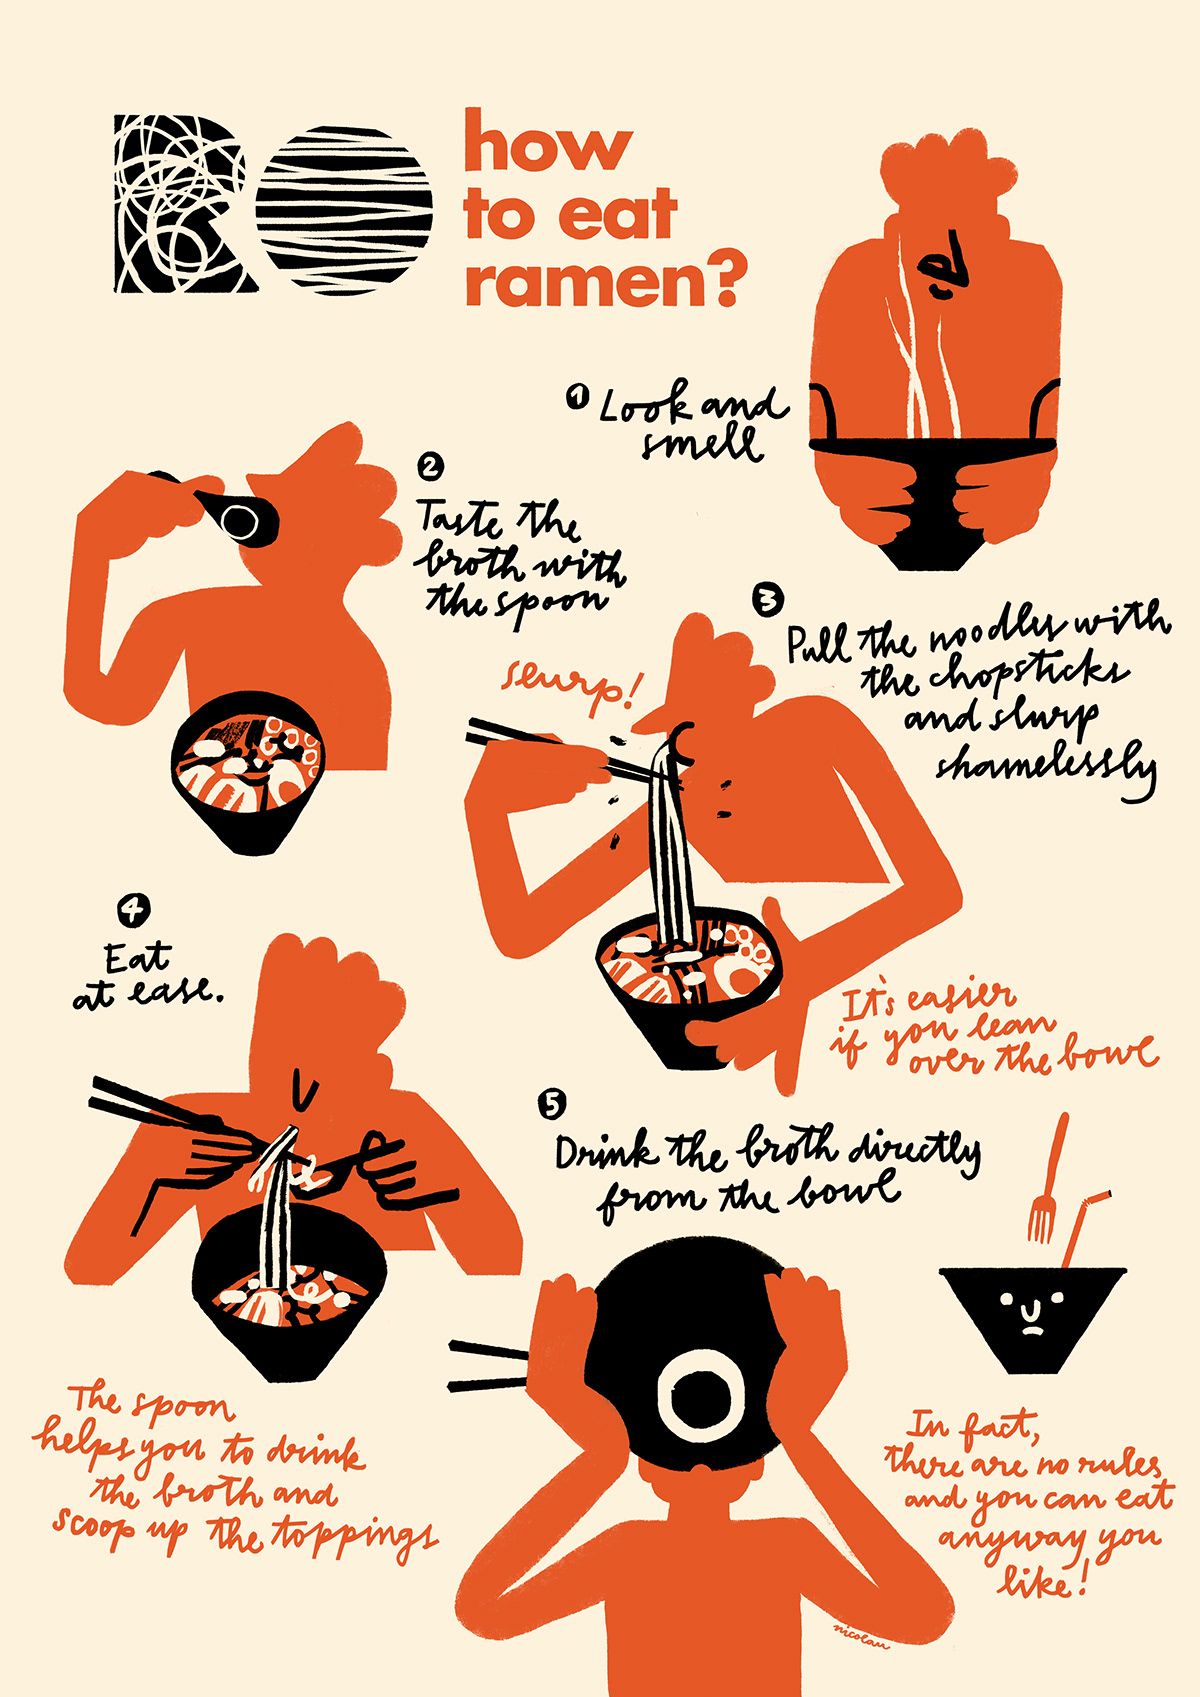 RO: How to eat ramen?